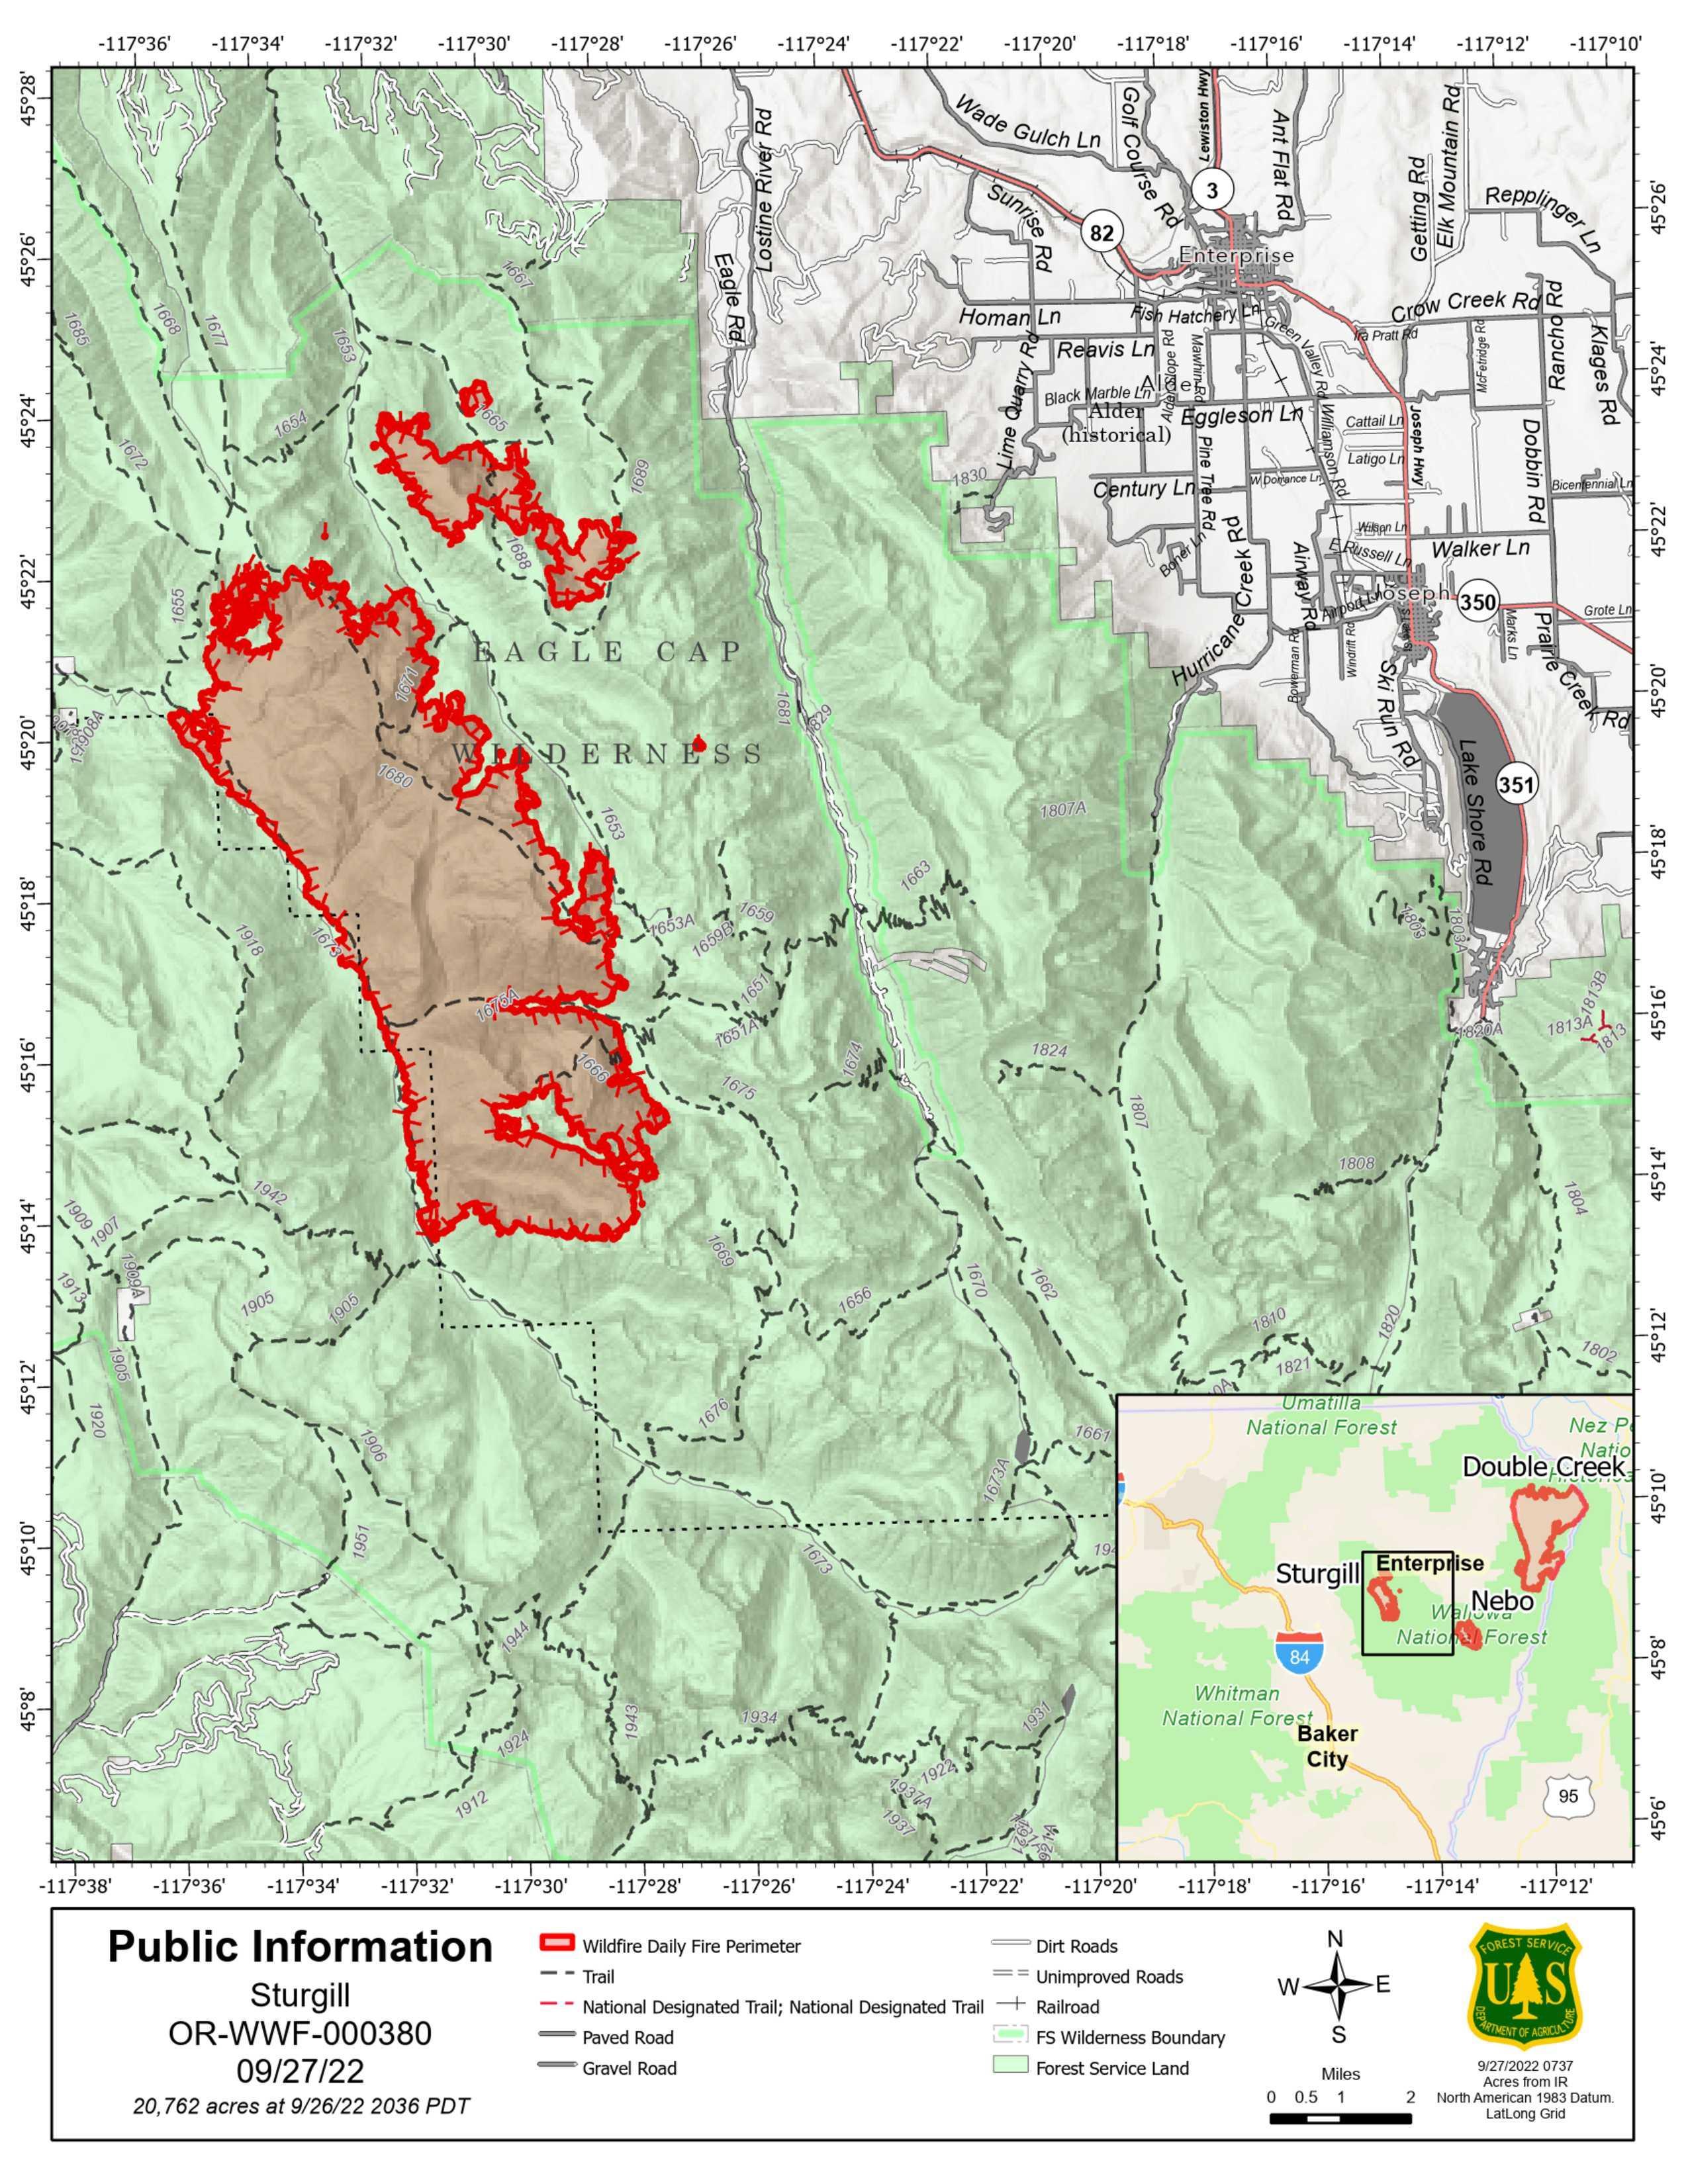 Goat Mountain 2 Fire Map - 09/27/2022